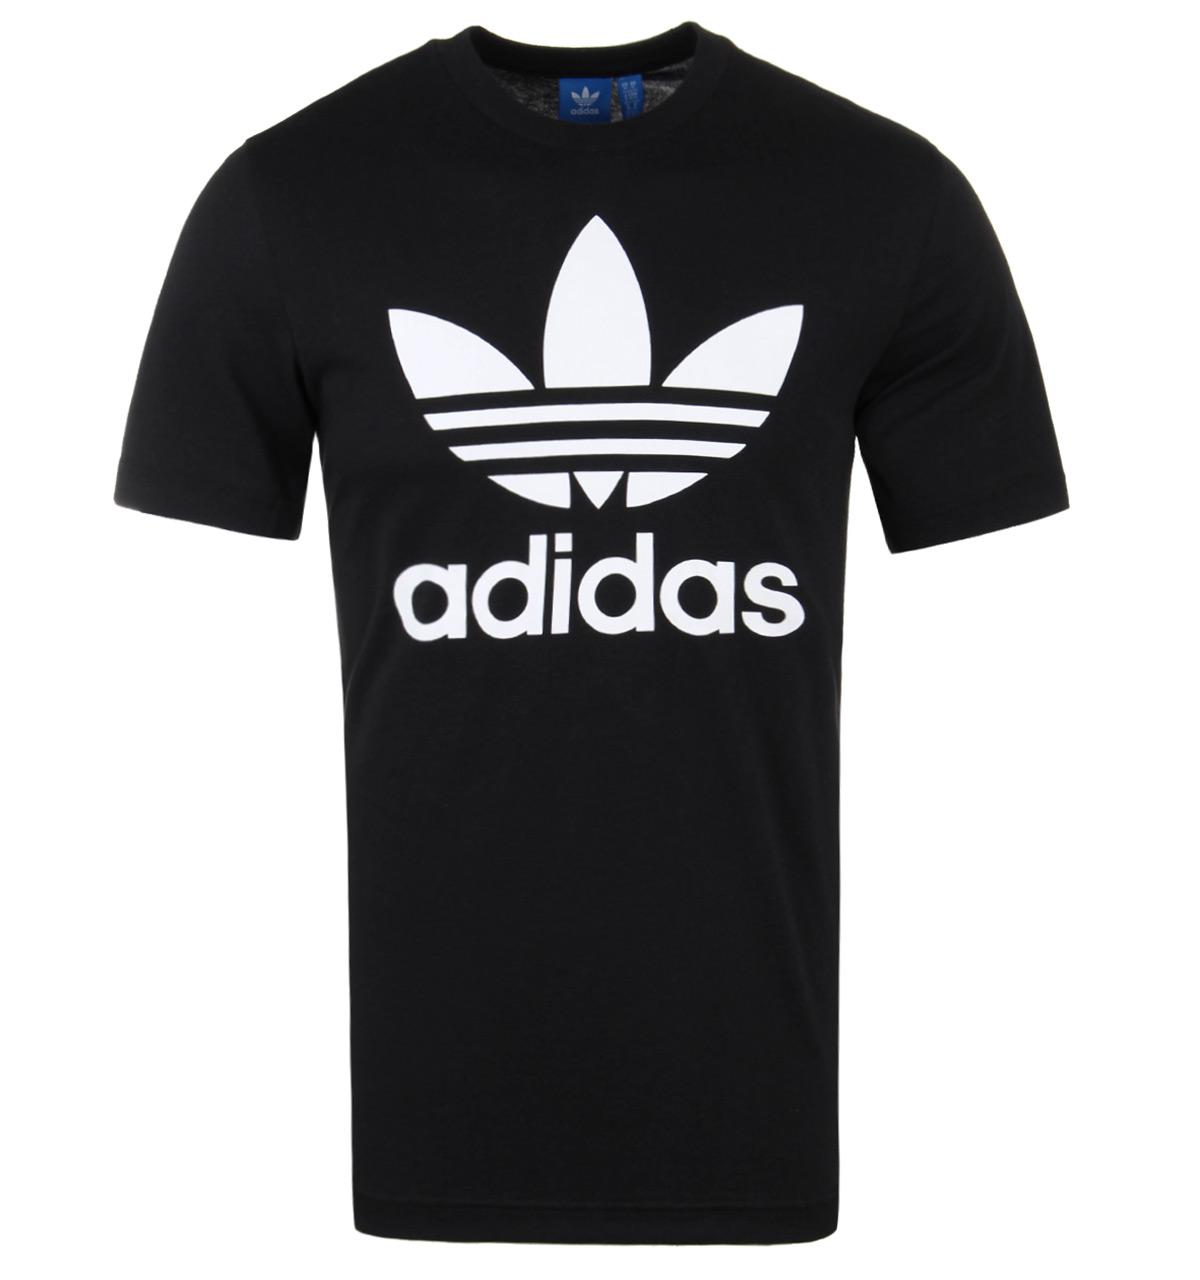 Lyst - Adidas Originals Black Trefoil Crew Neck T-shirt in Black for Men